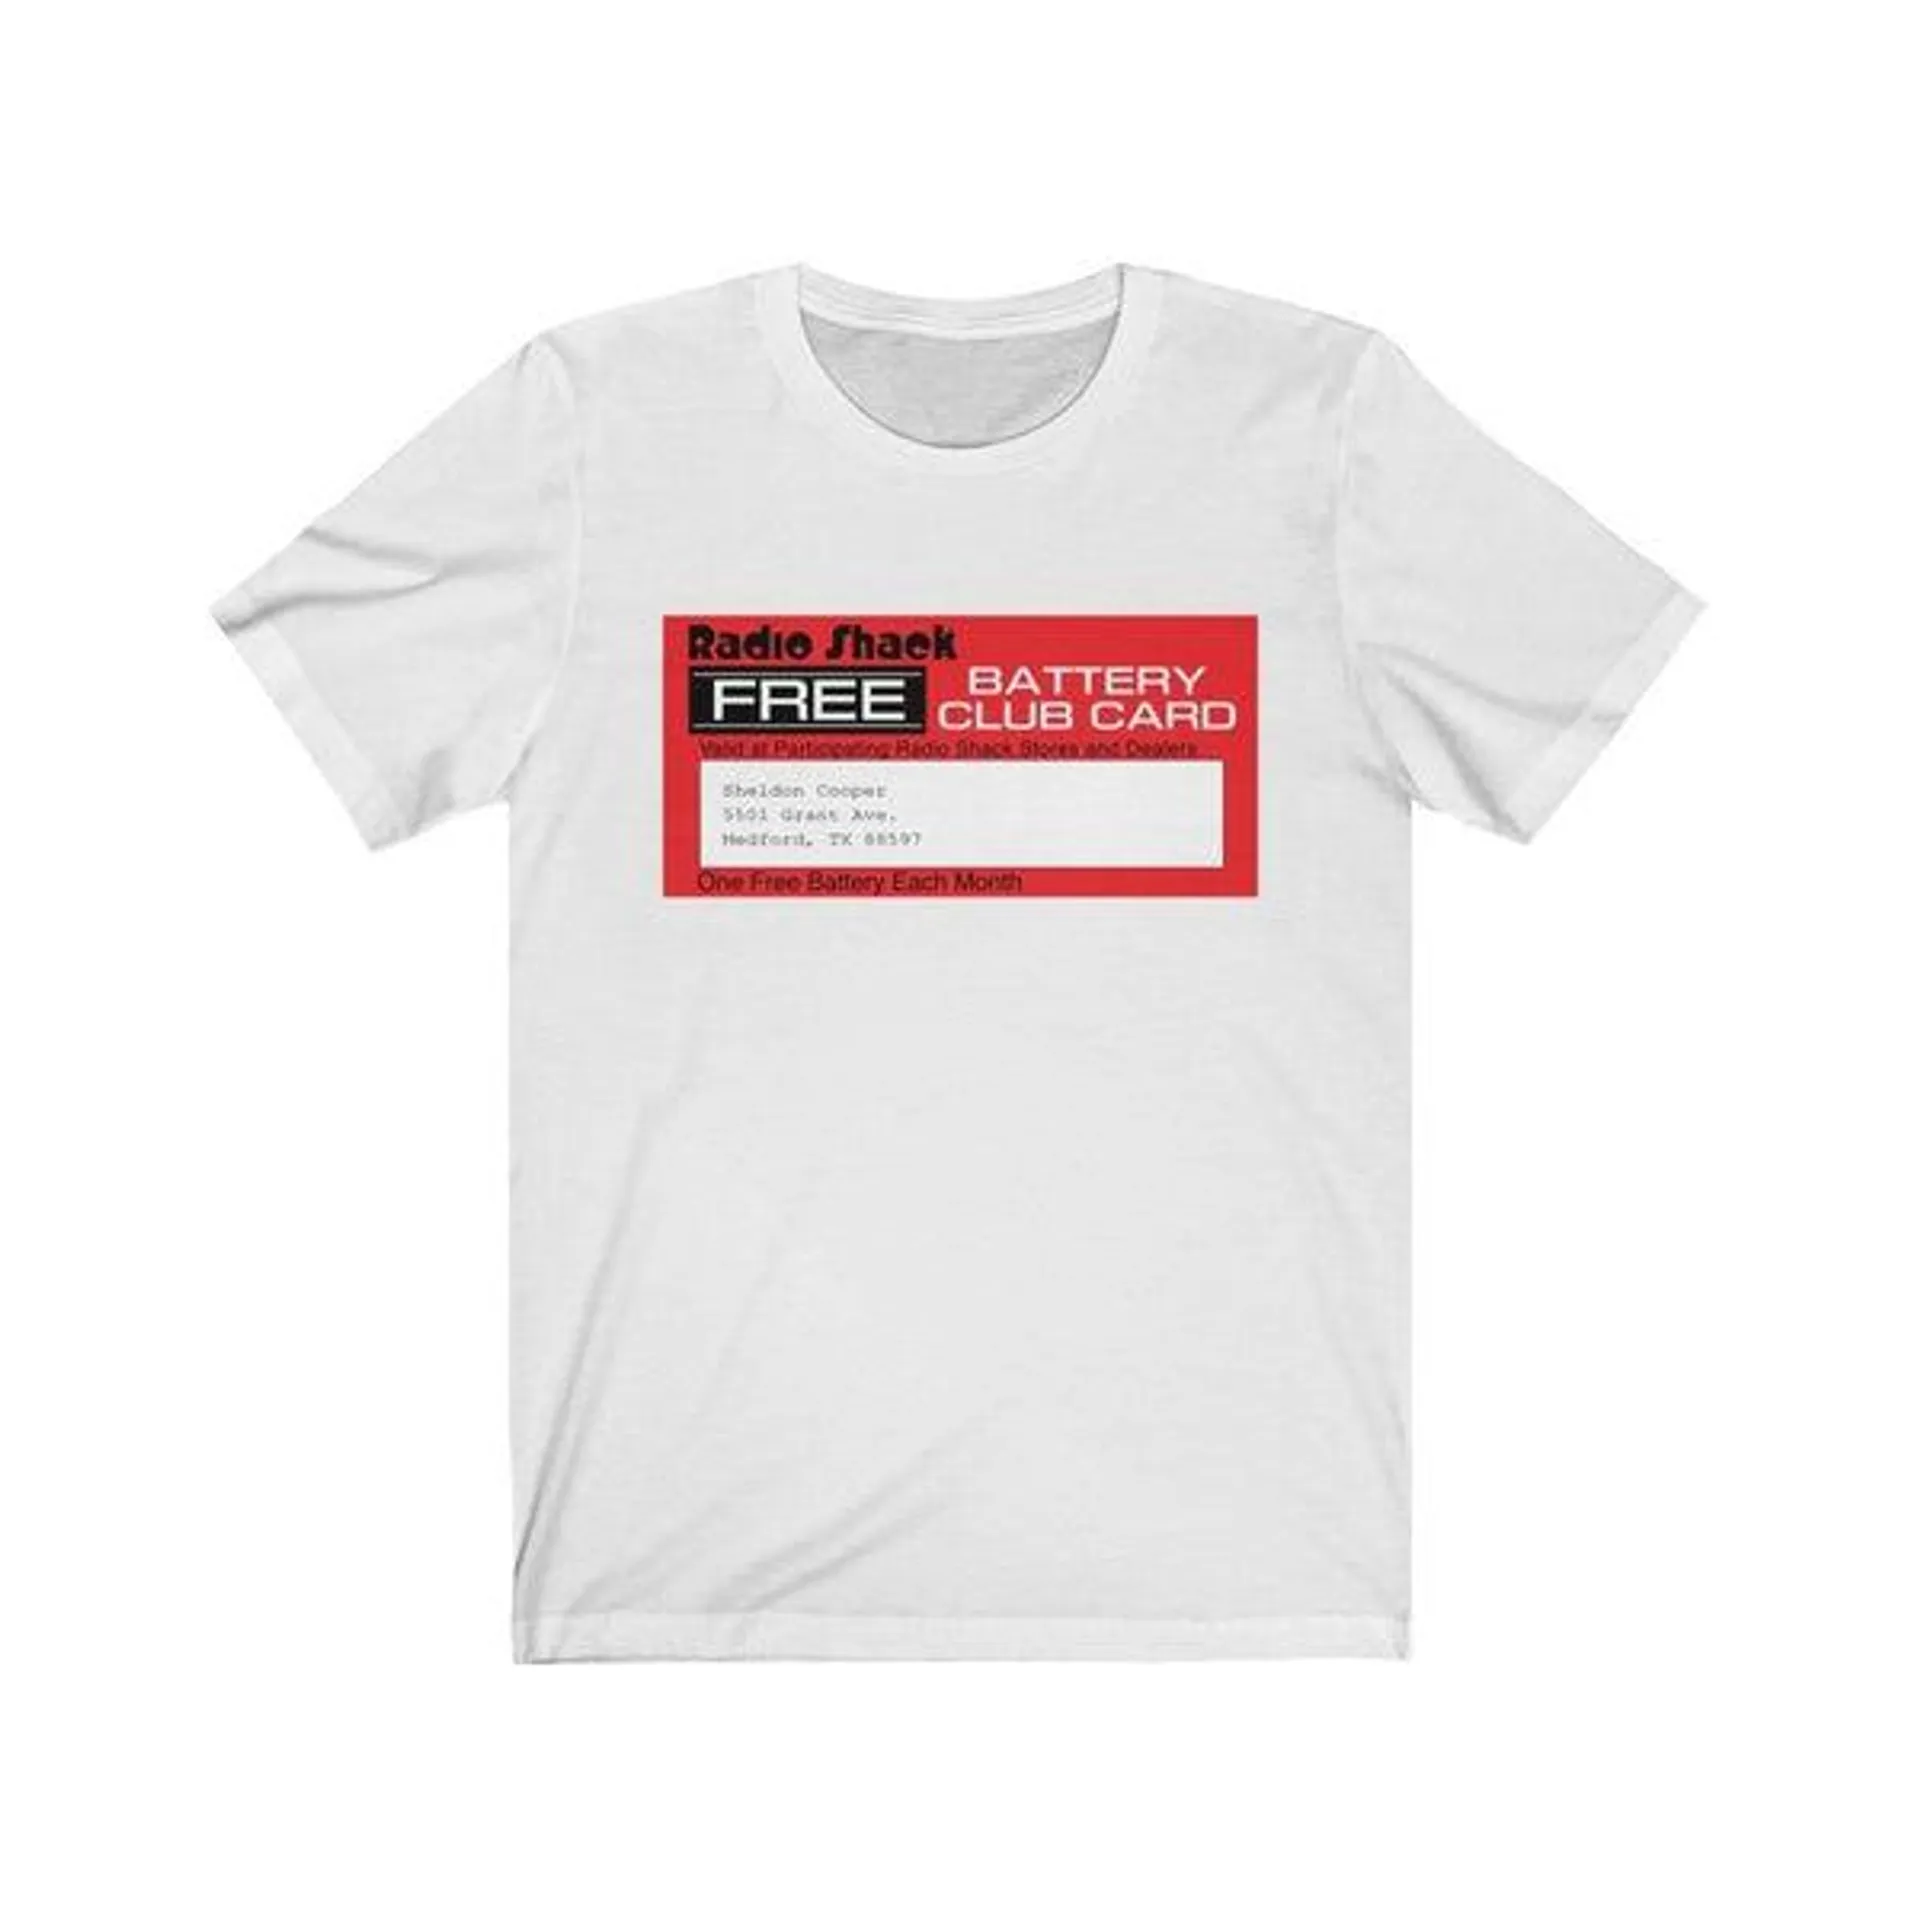 RadioShack "Battery Club Card" T-Shirt